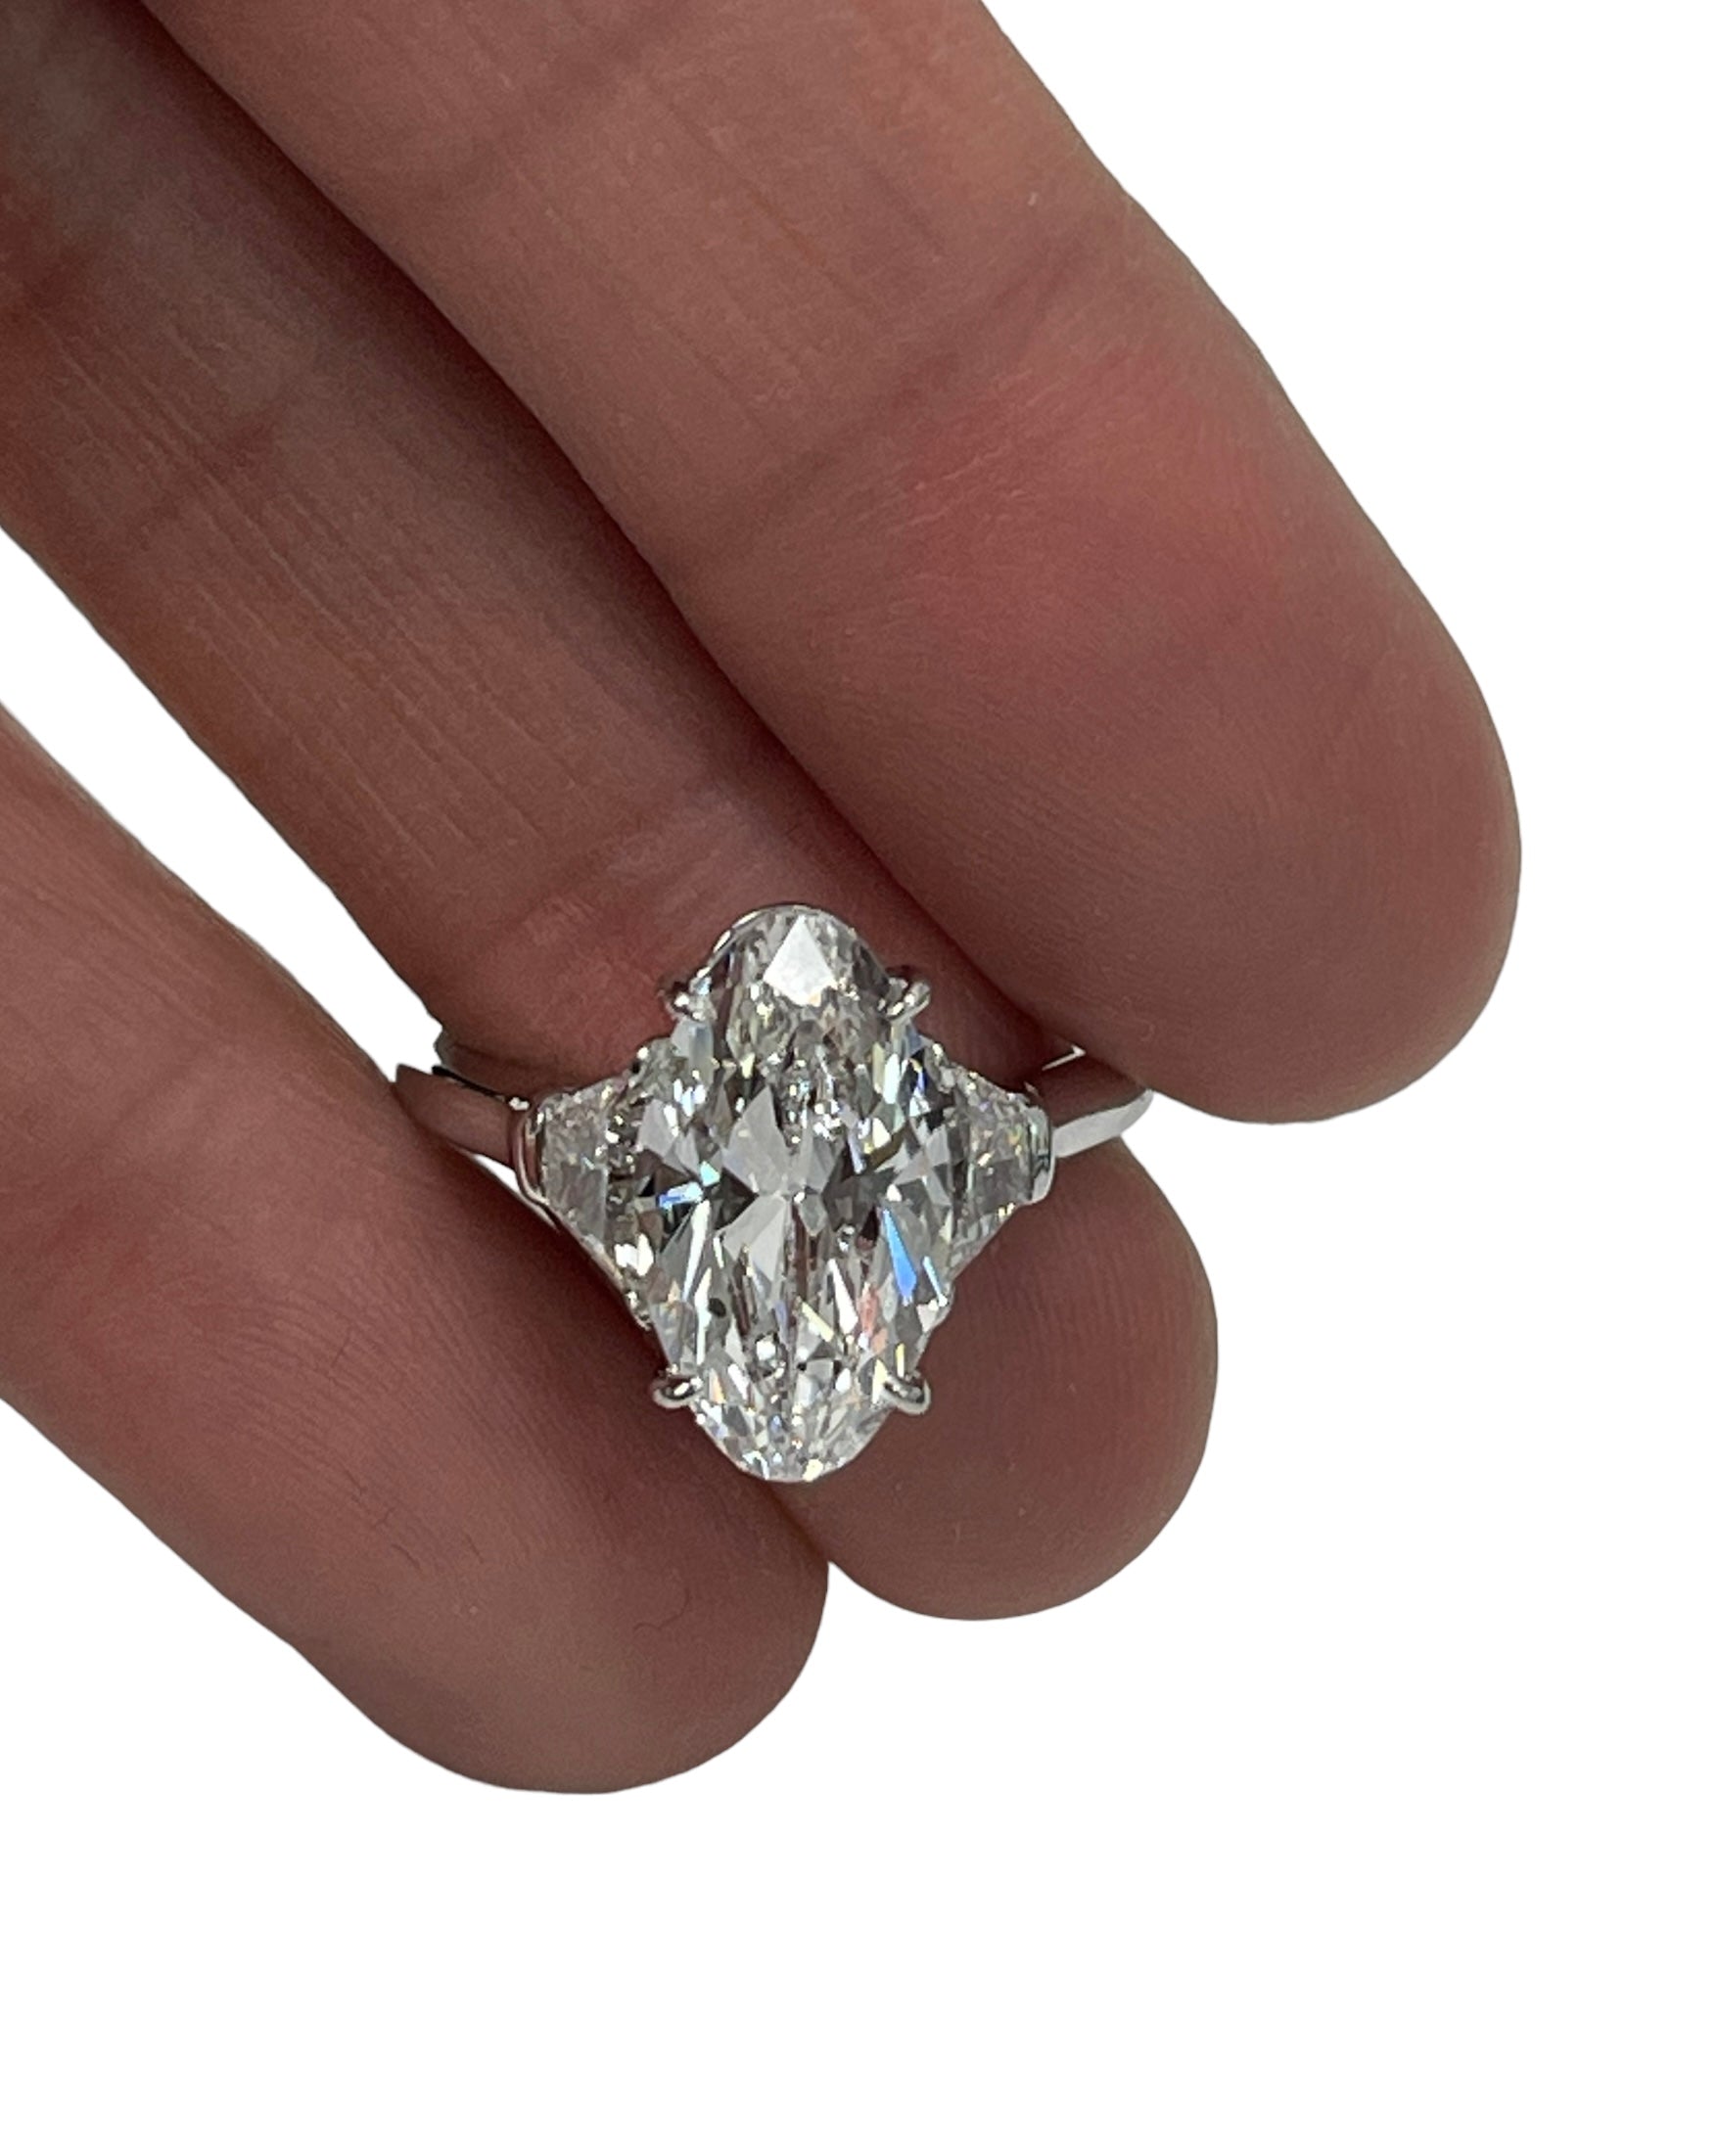 Oval Brilliant GIA Diamond Engagement Ring